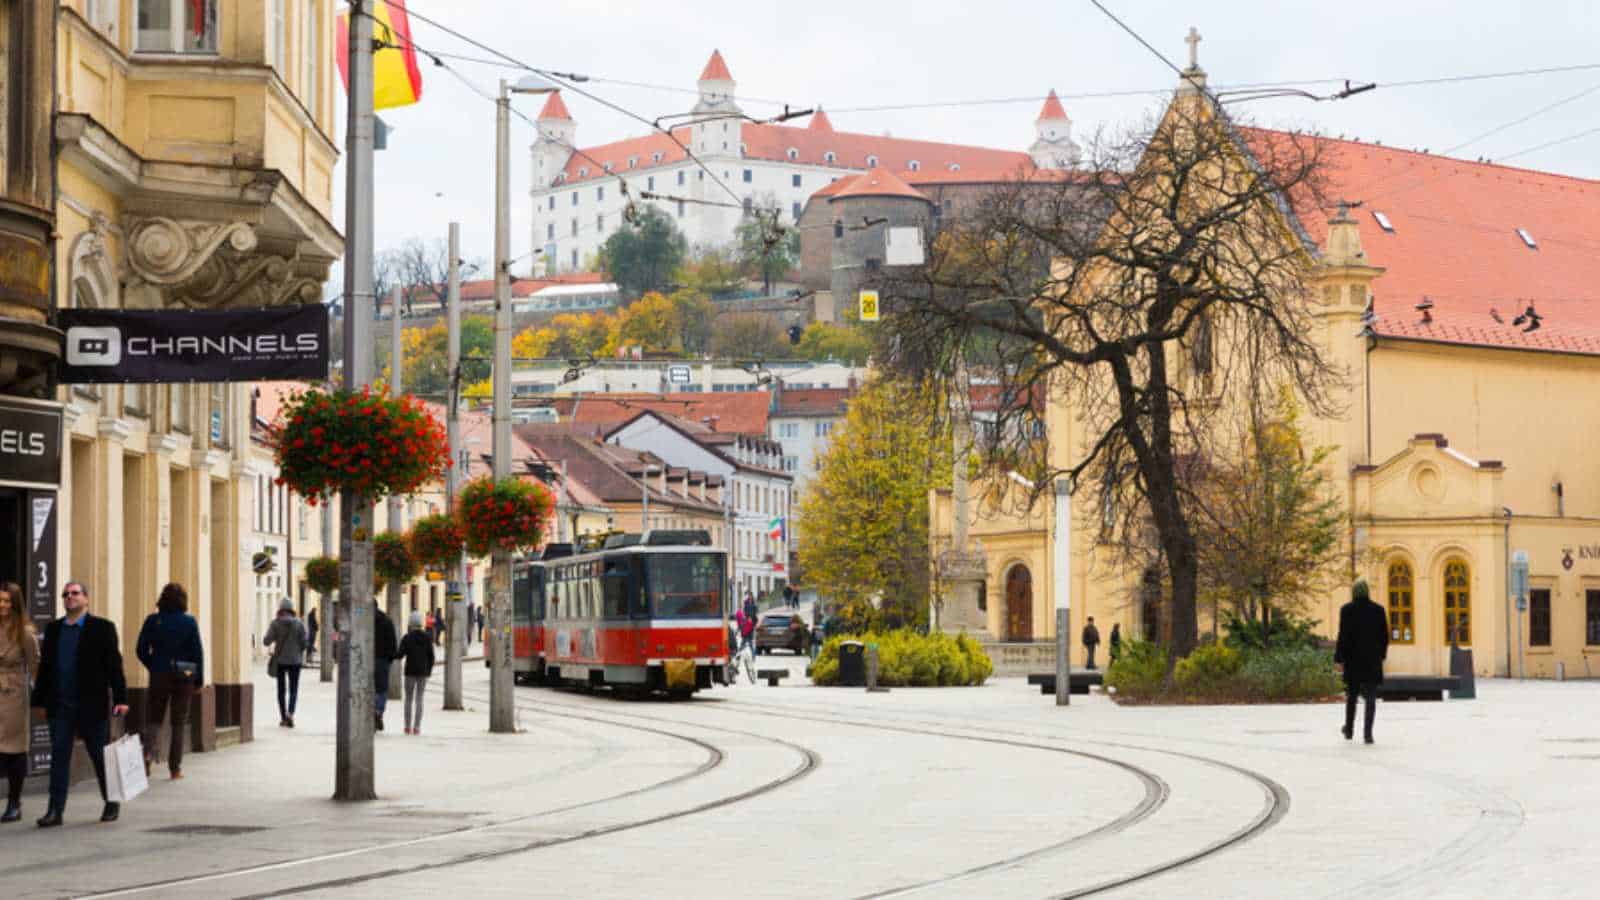 BRATISLAVA, SLOVAKIA - NOVENBER 3, 2017: Historical center of Bratislava with tramline and historic buildings, Slovakia